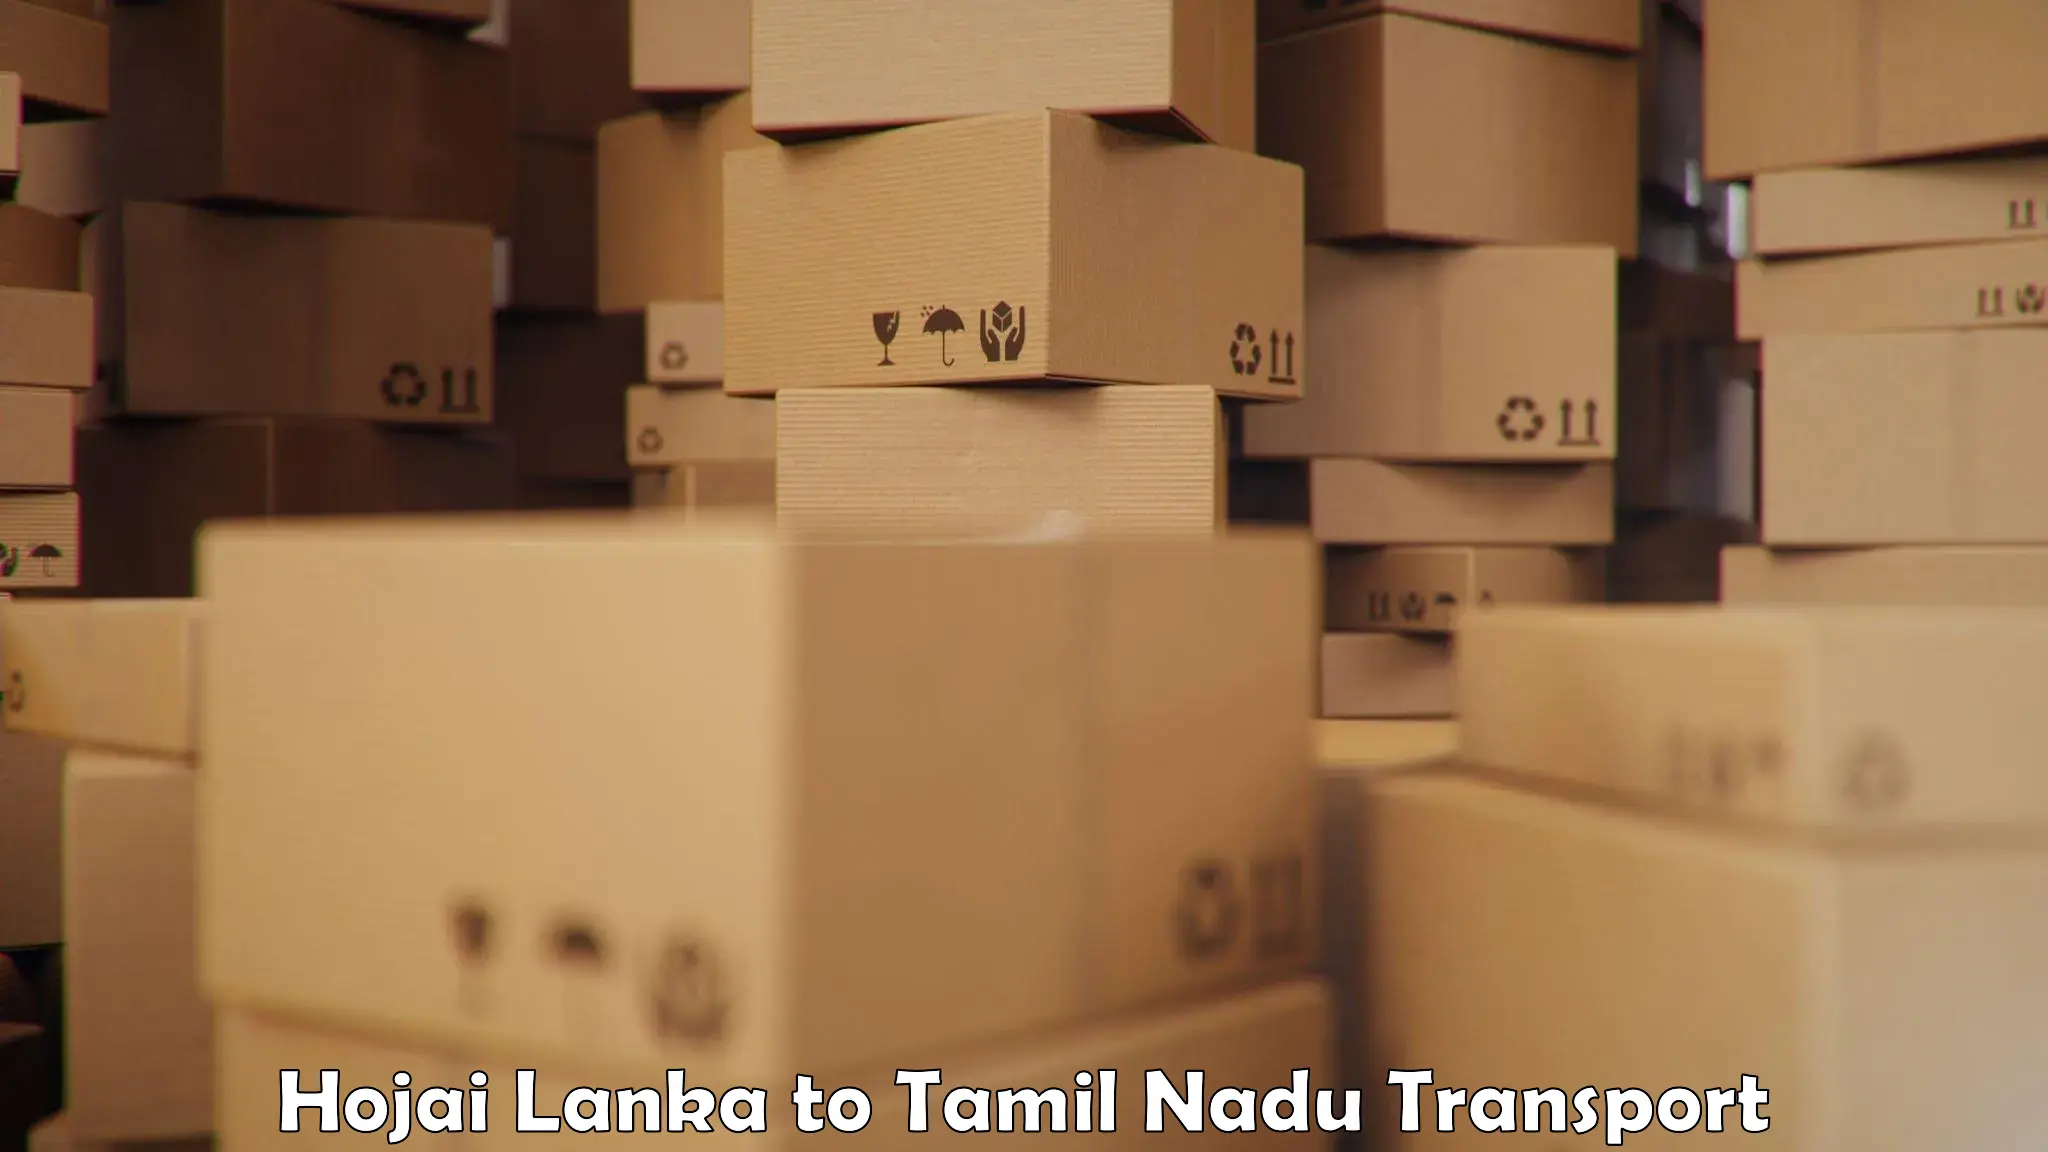 Express transport services Hojai Lanka to Tamil Nadu